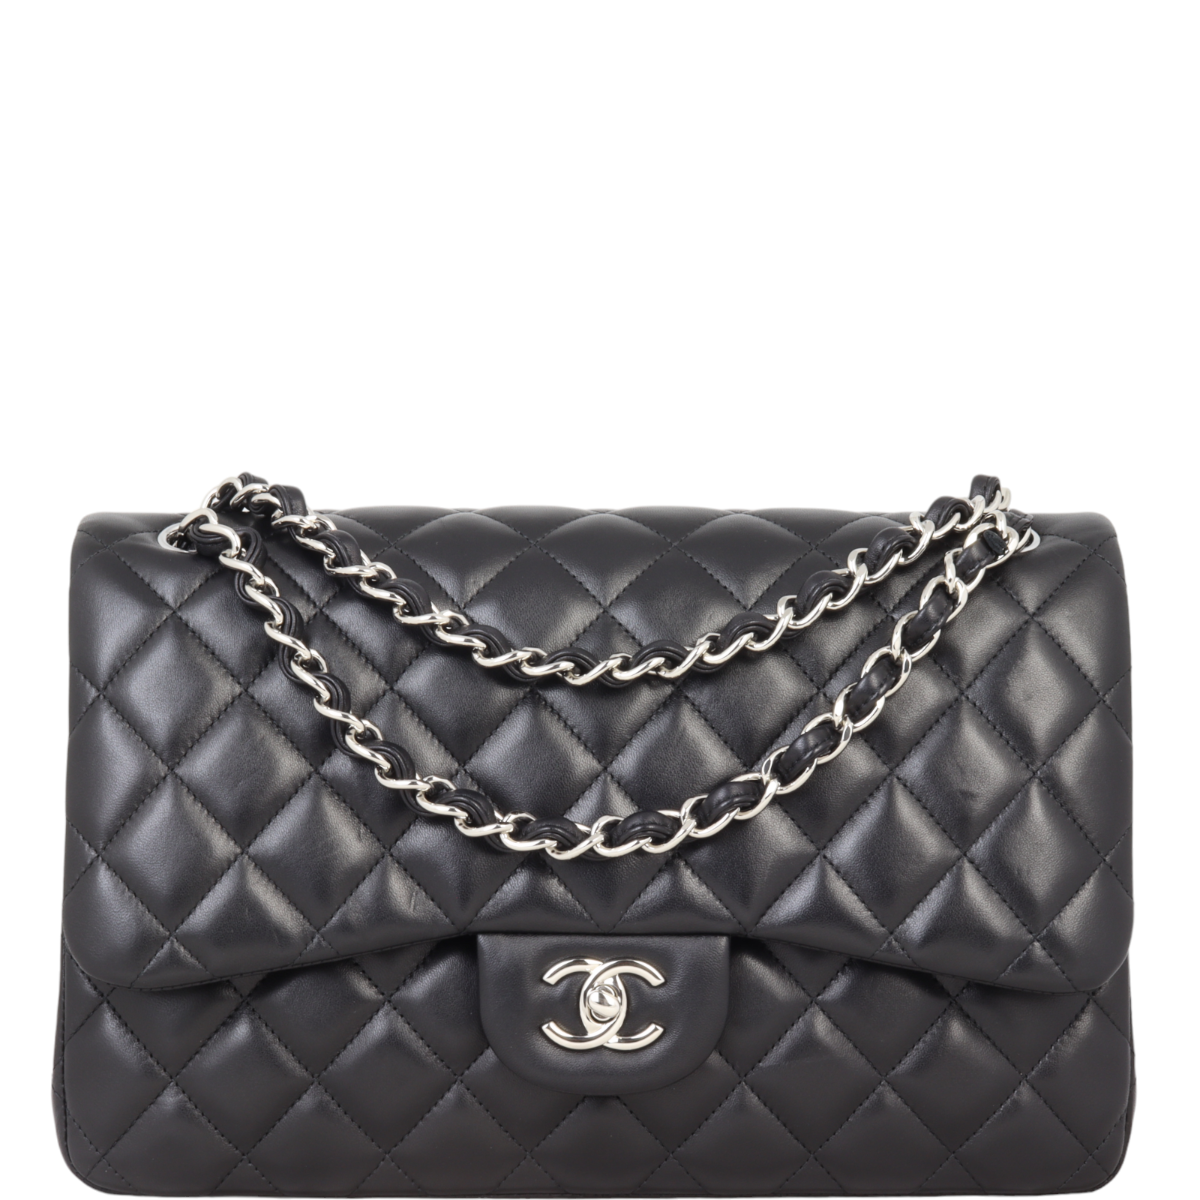 black chanel classic handbag